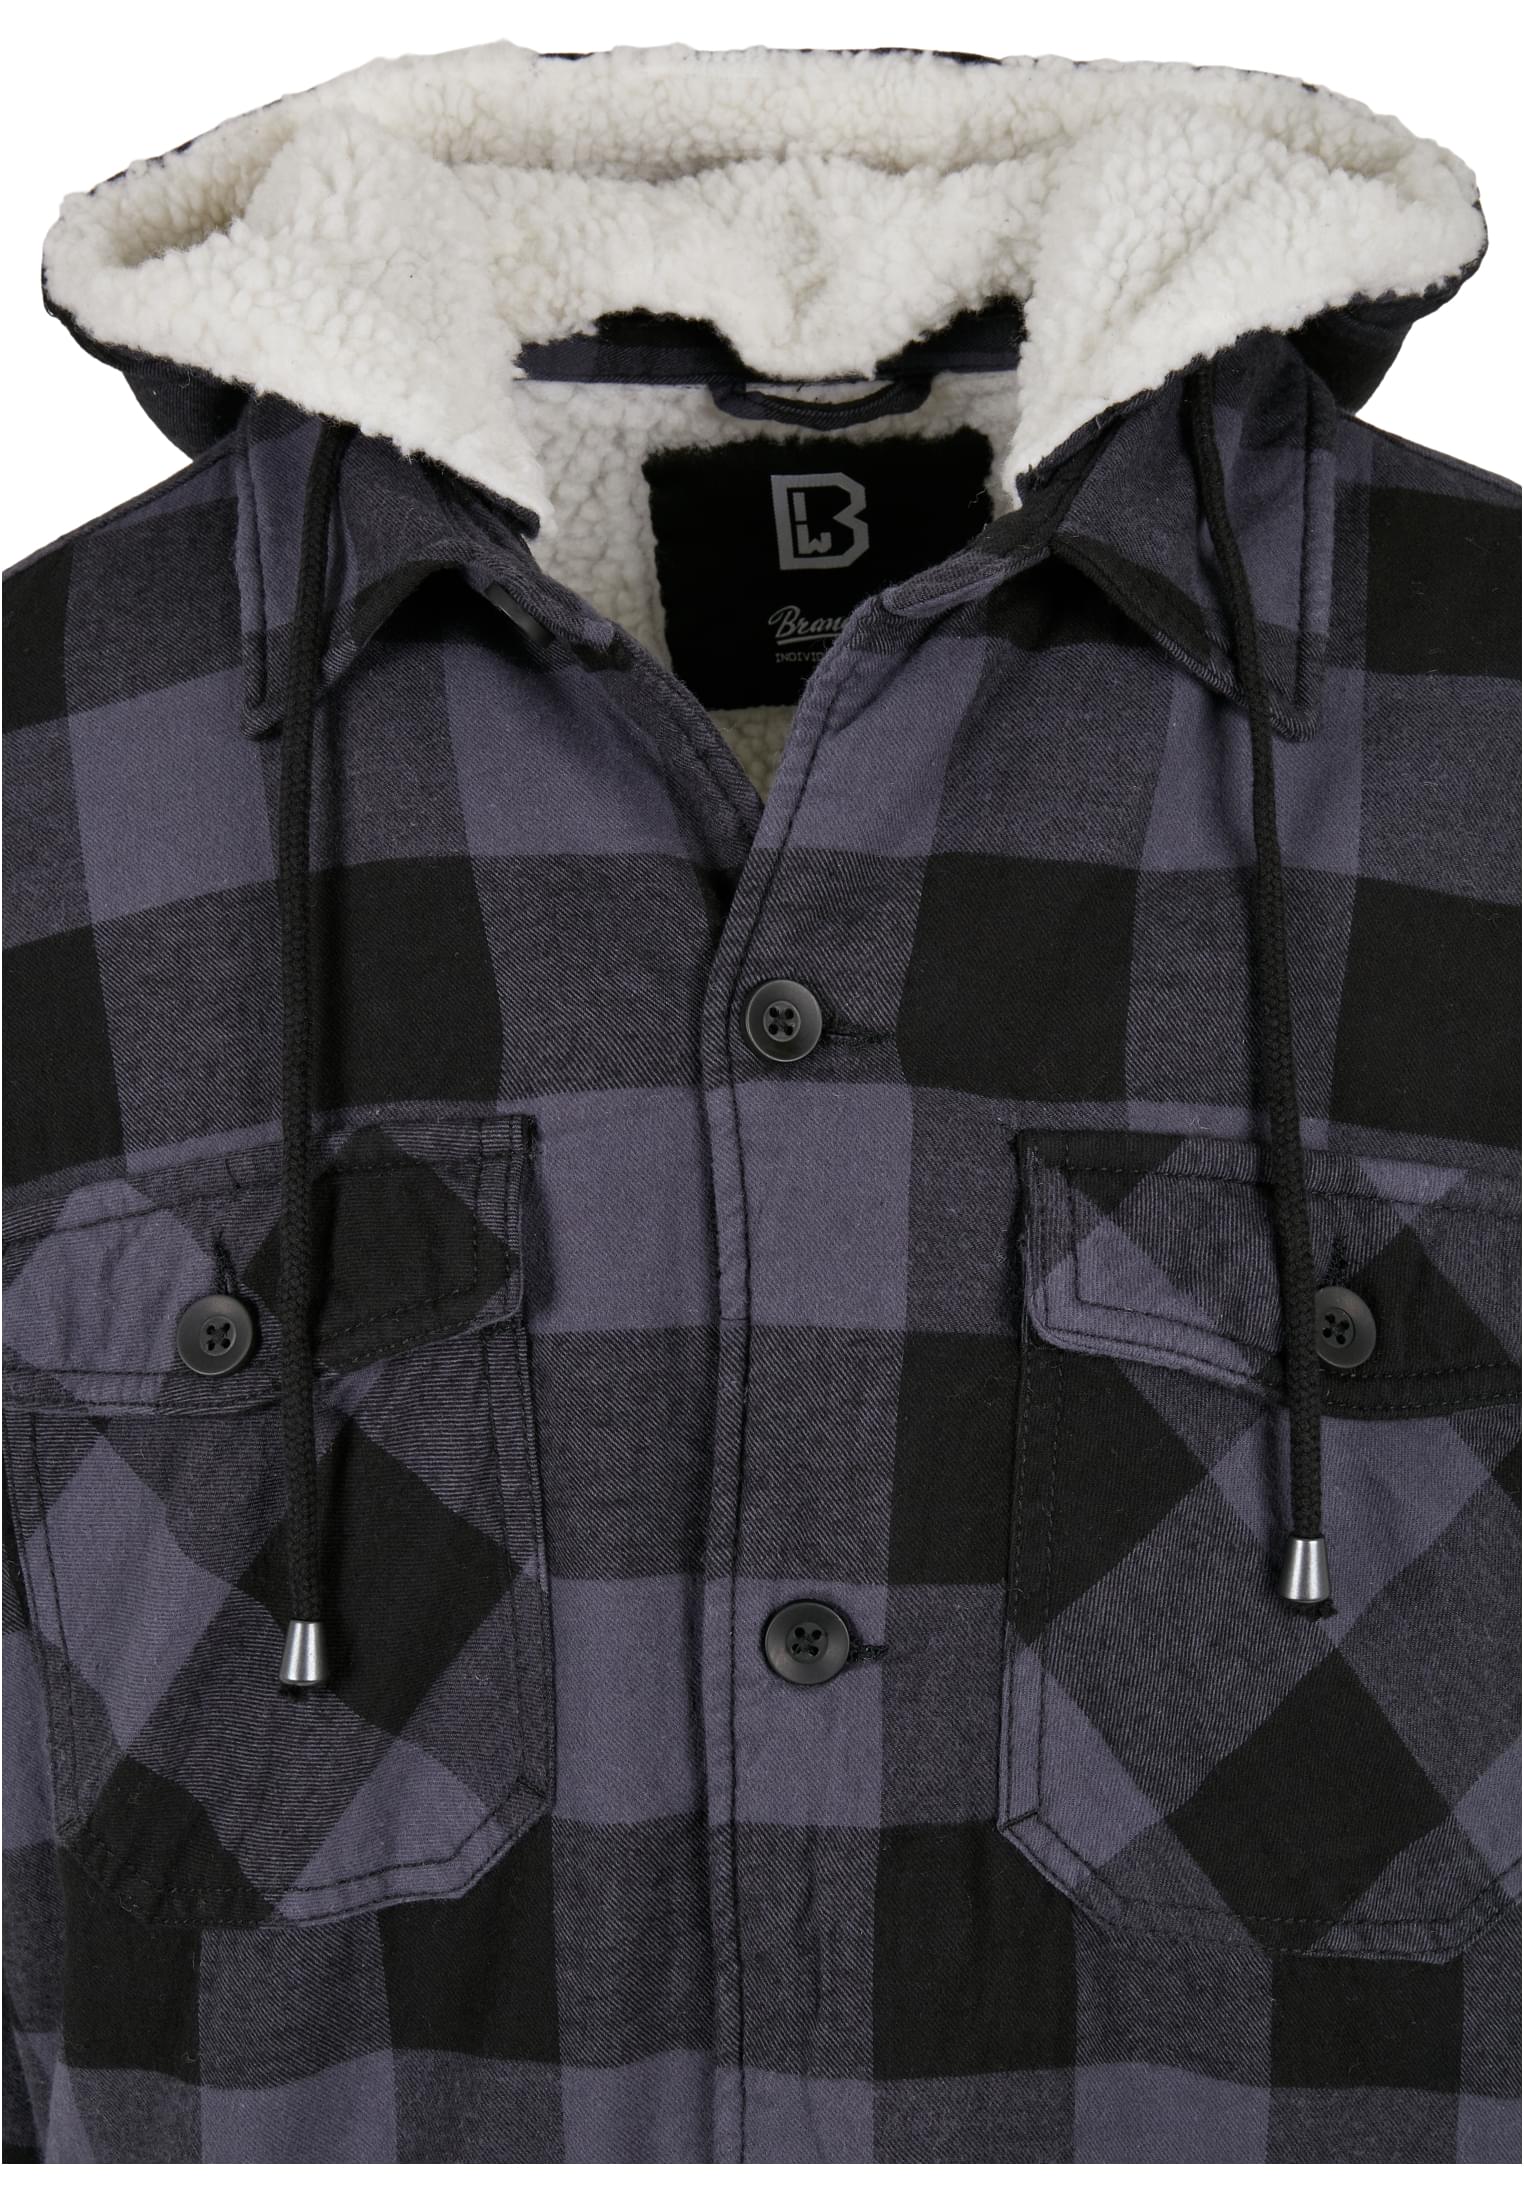 Jacken Lumberjacket Hooded in Farbe black/grey